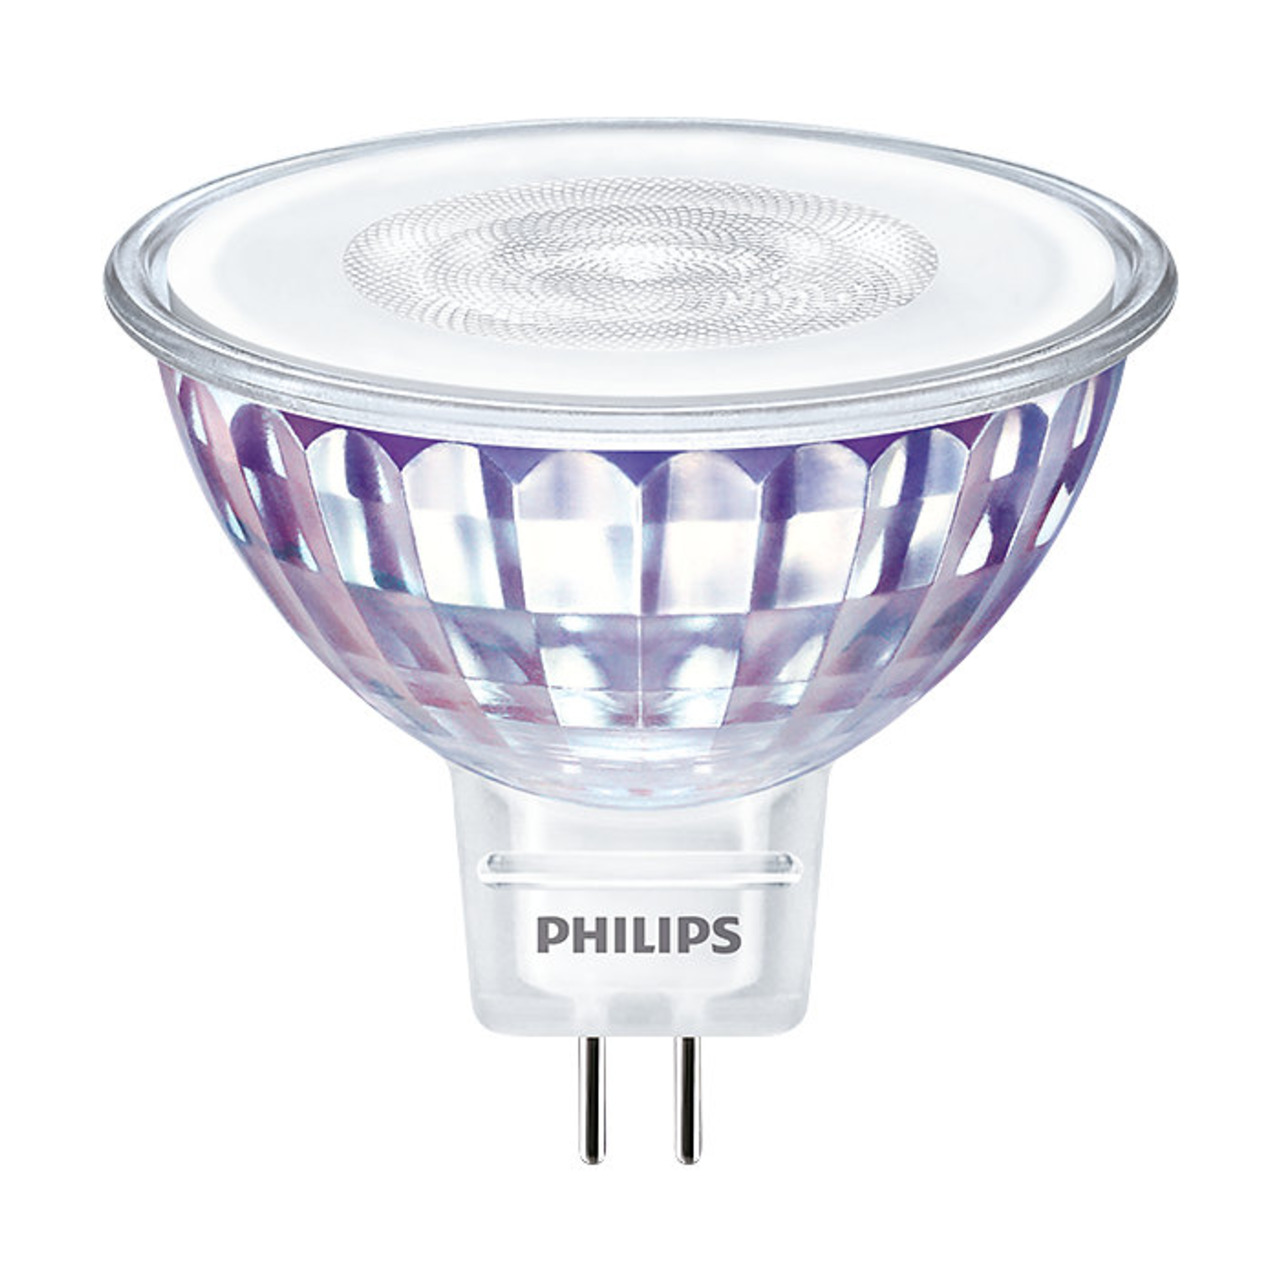 Philips 5-8-W-GU5-3-LED-Lampe Master LEDspot Value- MR16- 450 lm- warmweiss (2700 K)- 36- dimmbar unter Beleuchtung